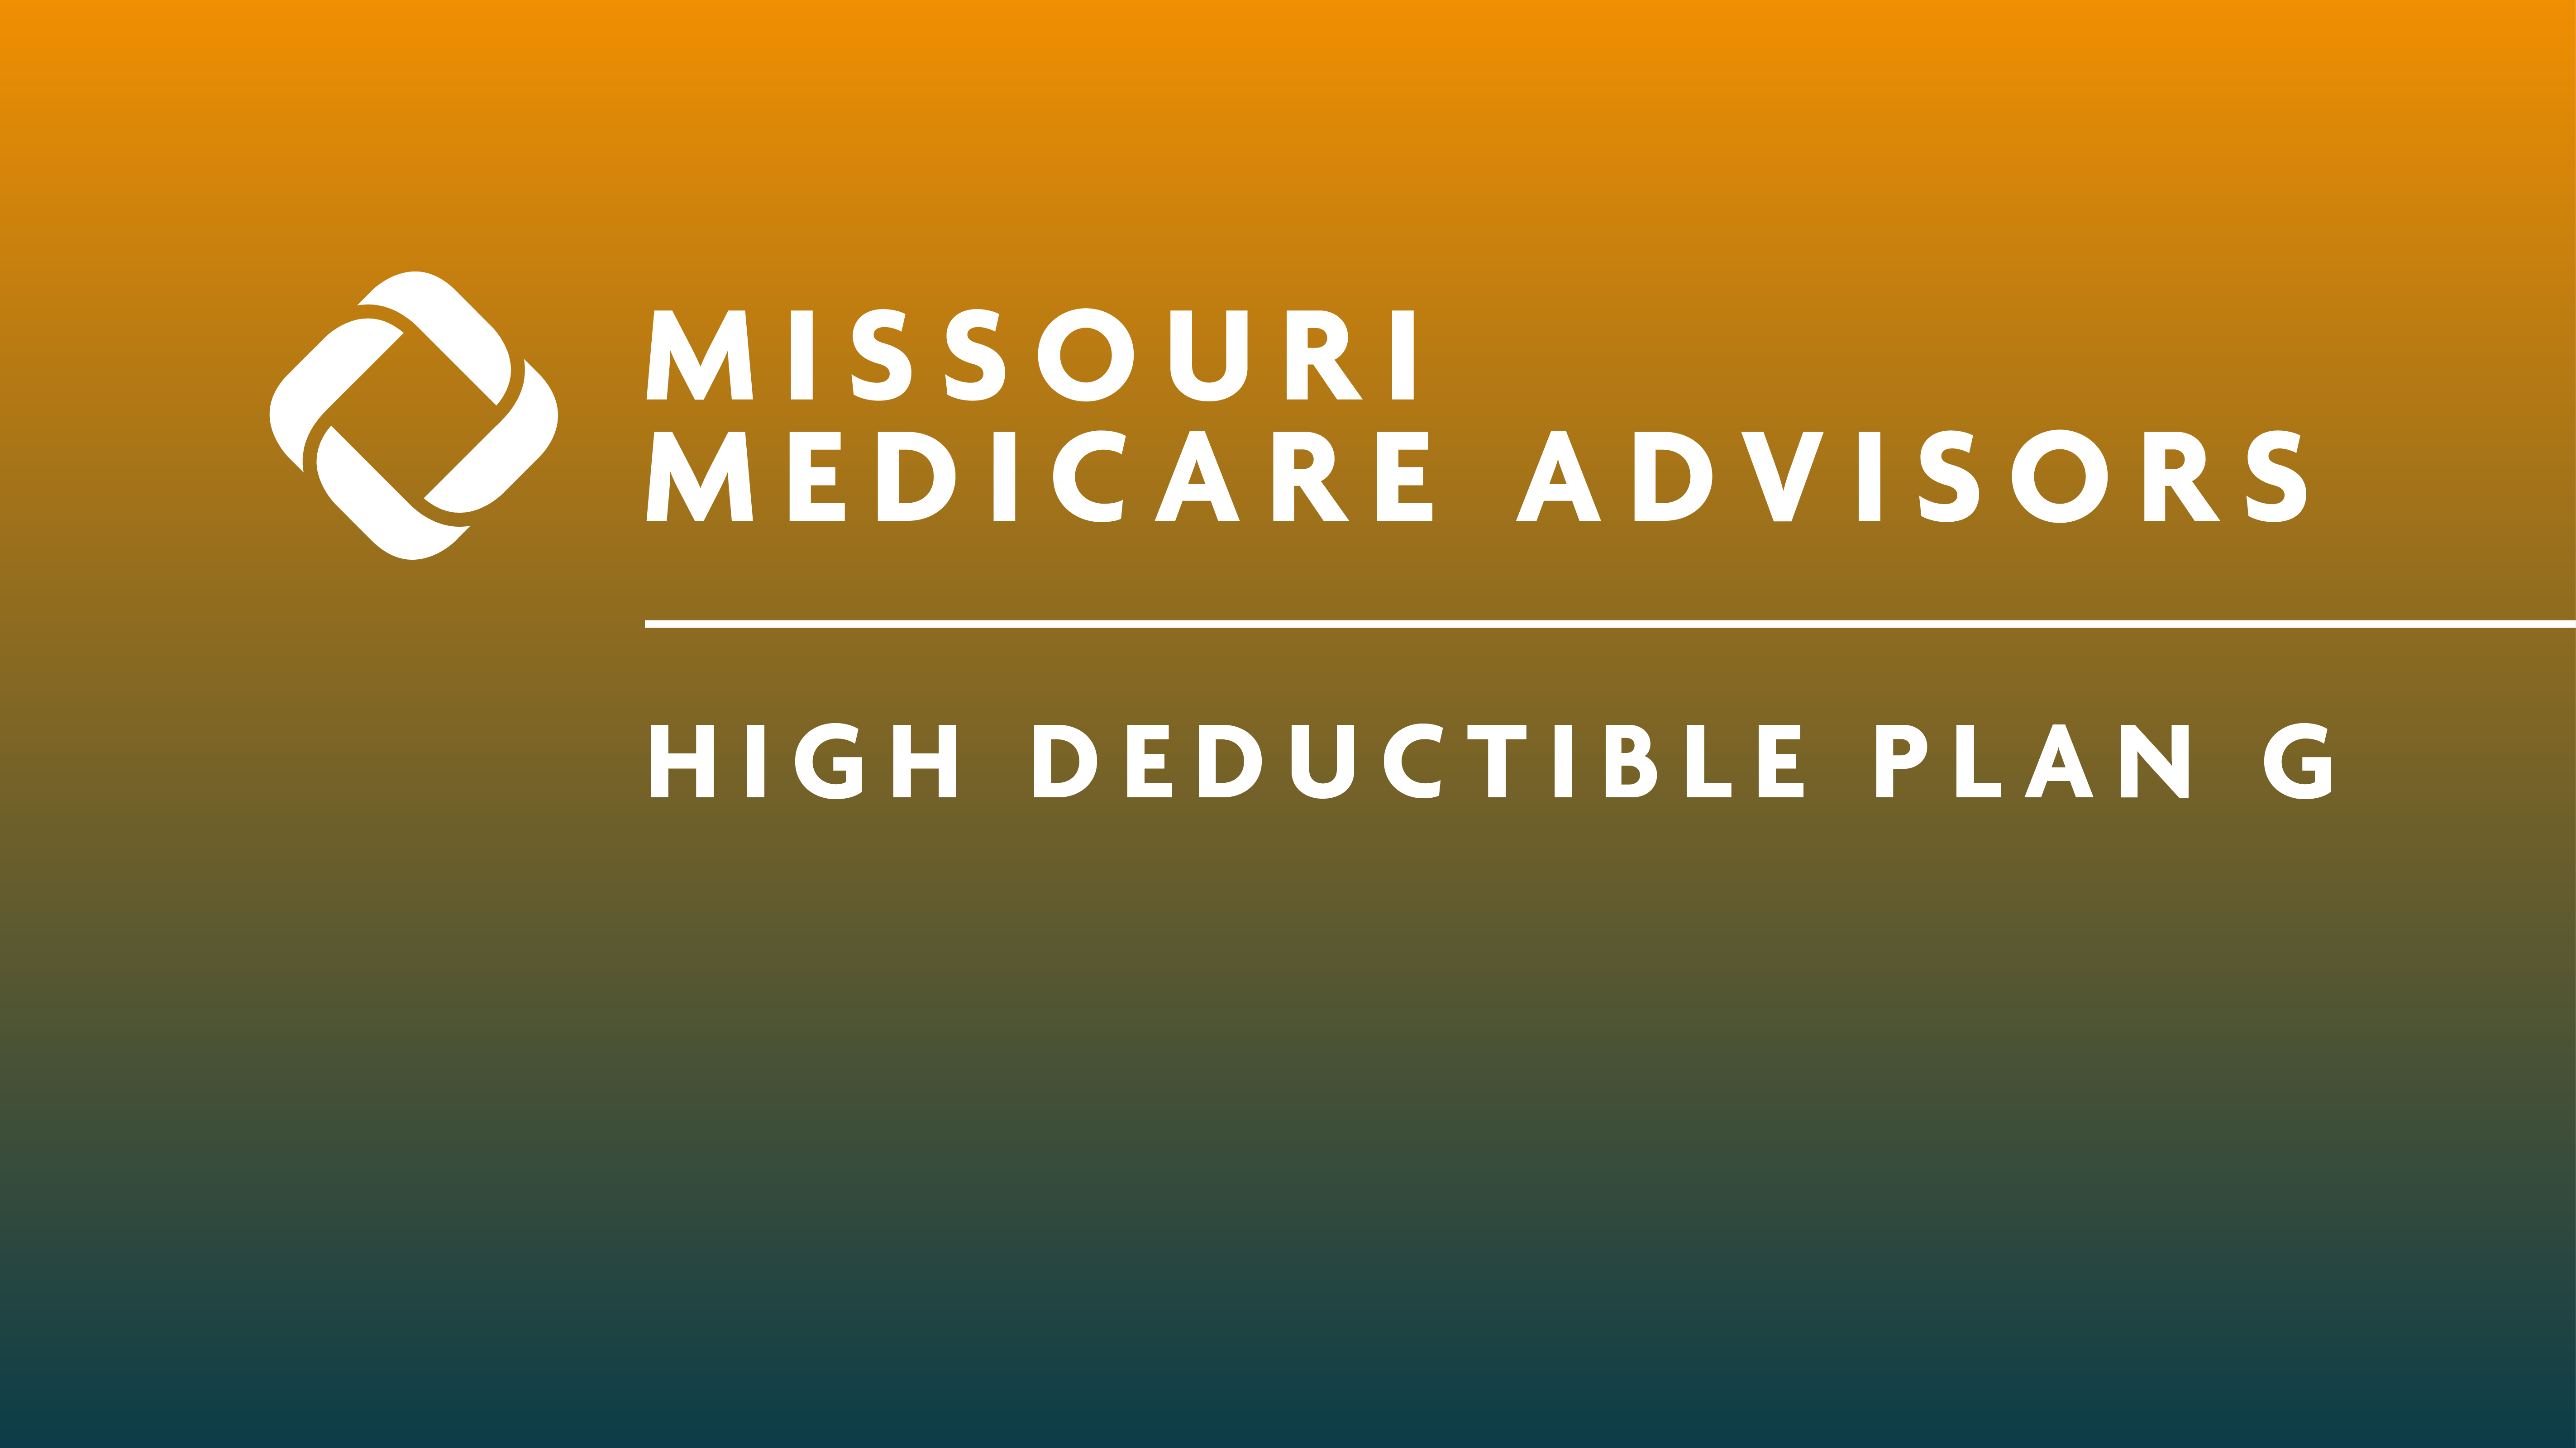 High deductible plan G explained by Missouri Insurance Advisors